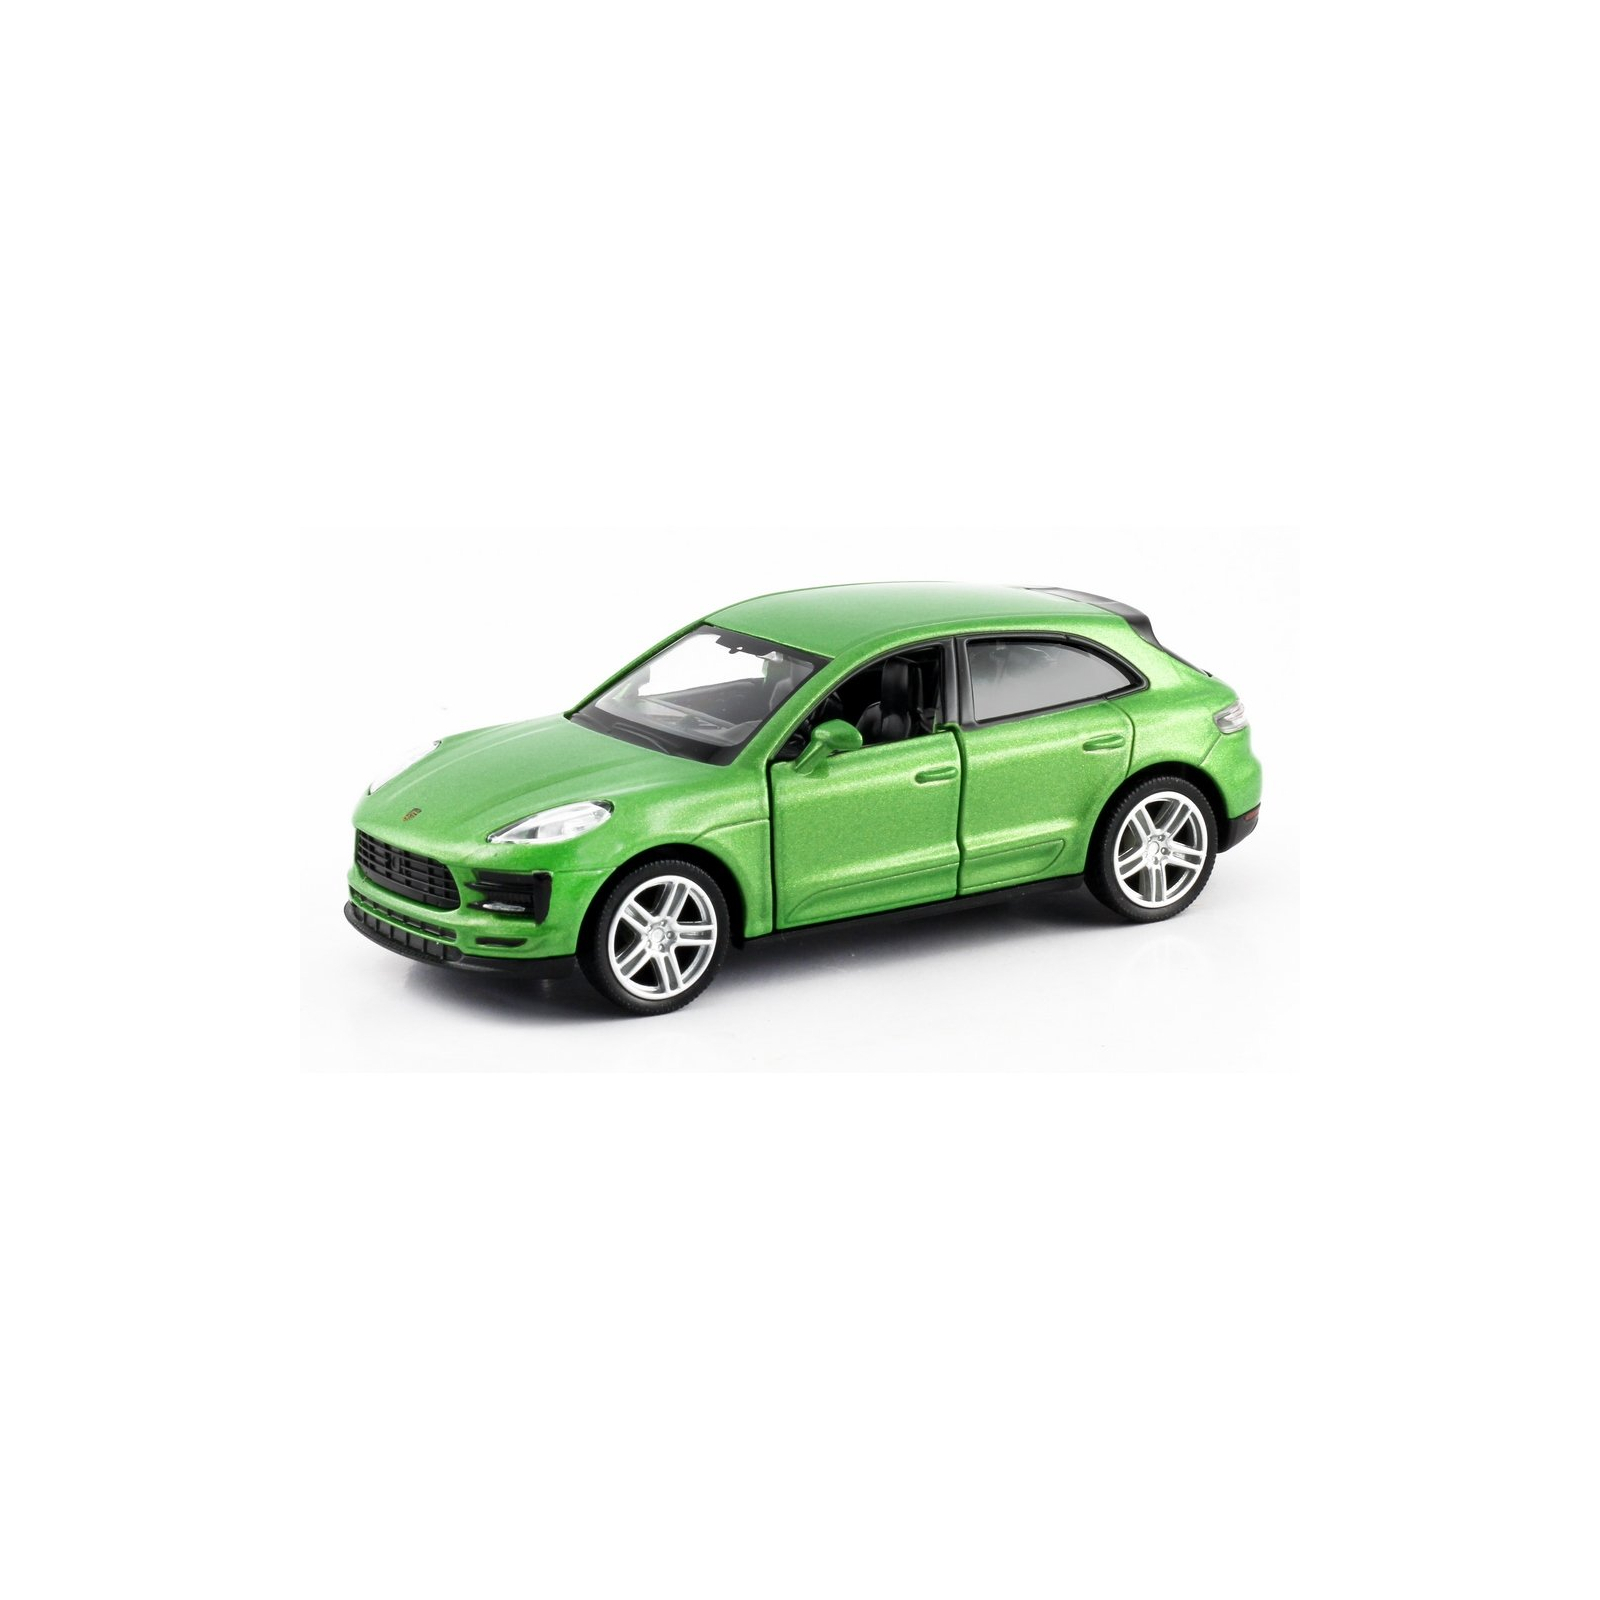 Машина Uni-Fortune PORSCHE MACAN S 2019 зеленый (554049)